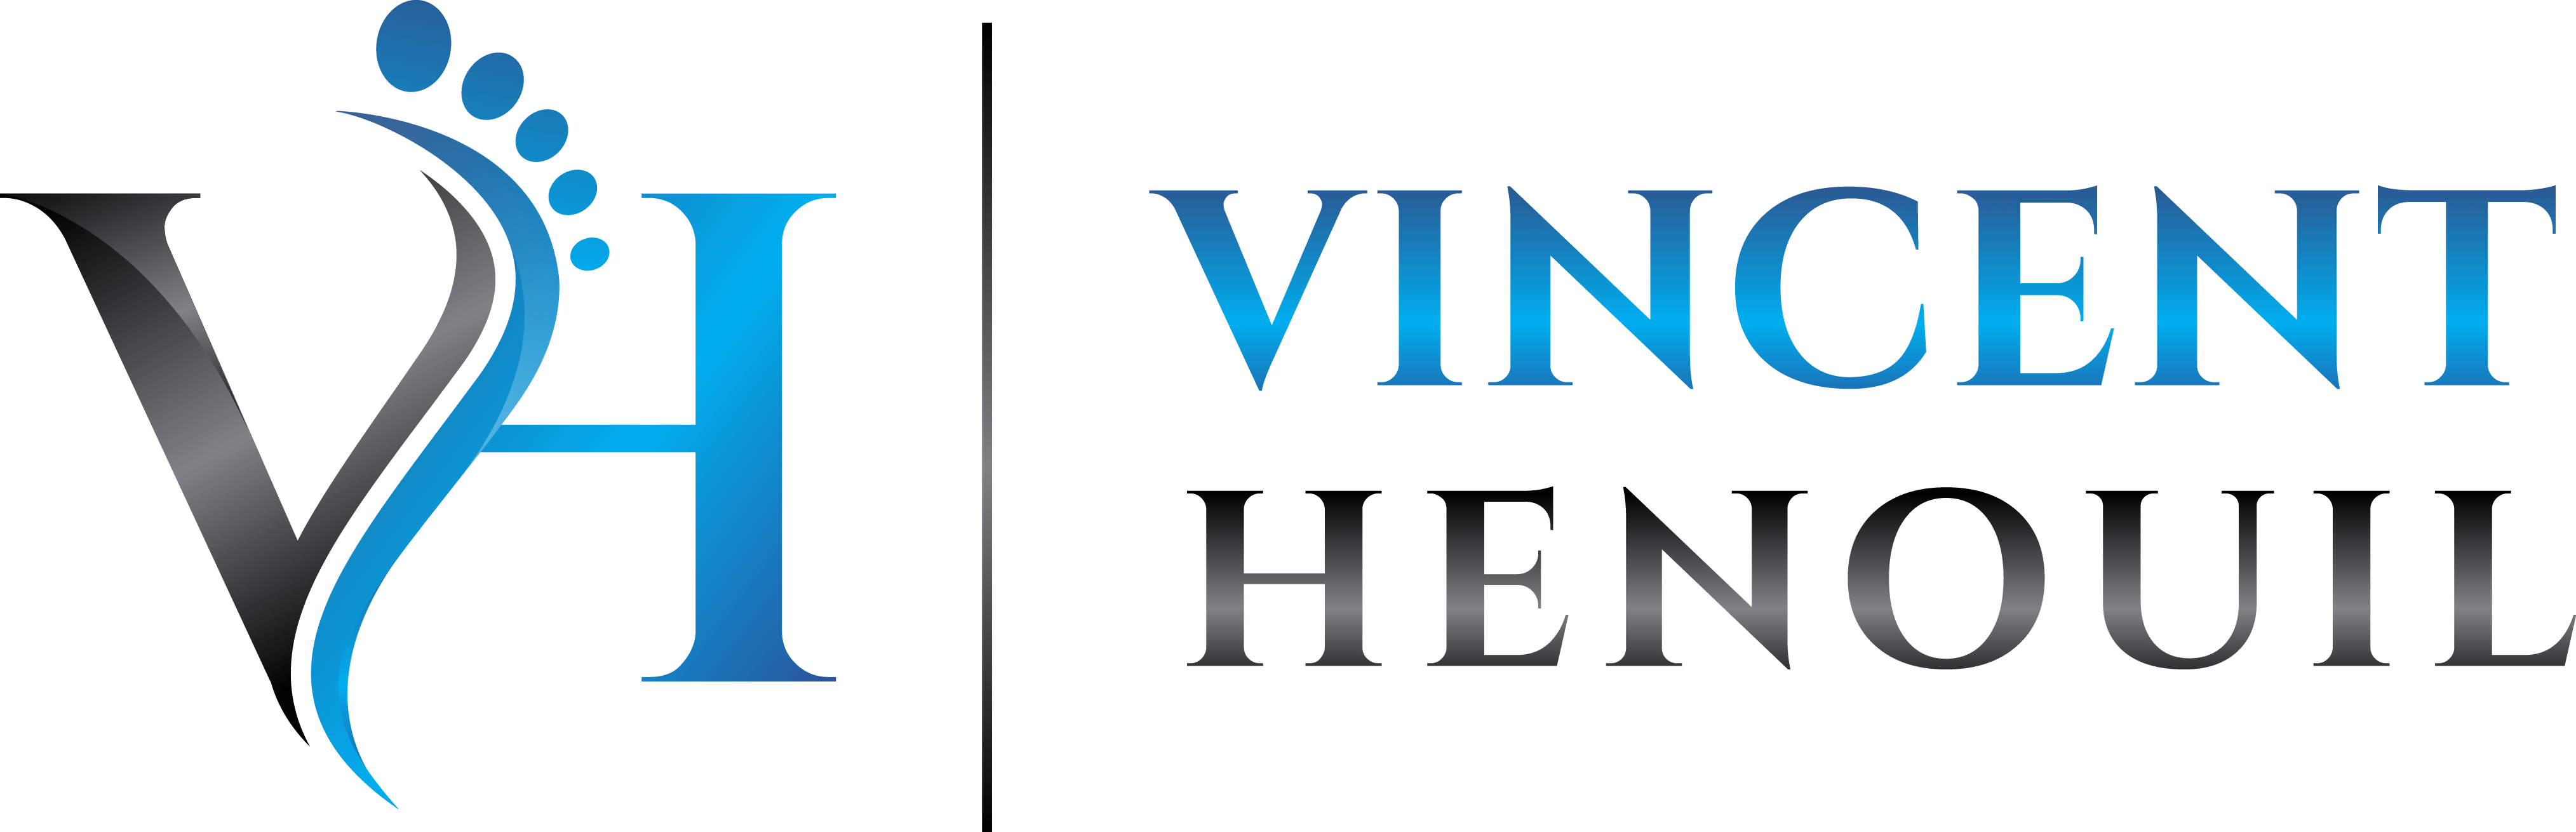 Vincent Henouil logo